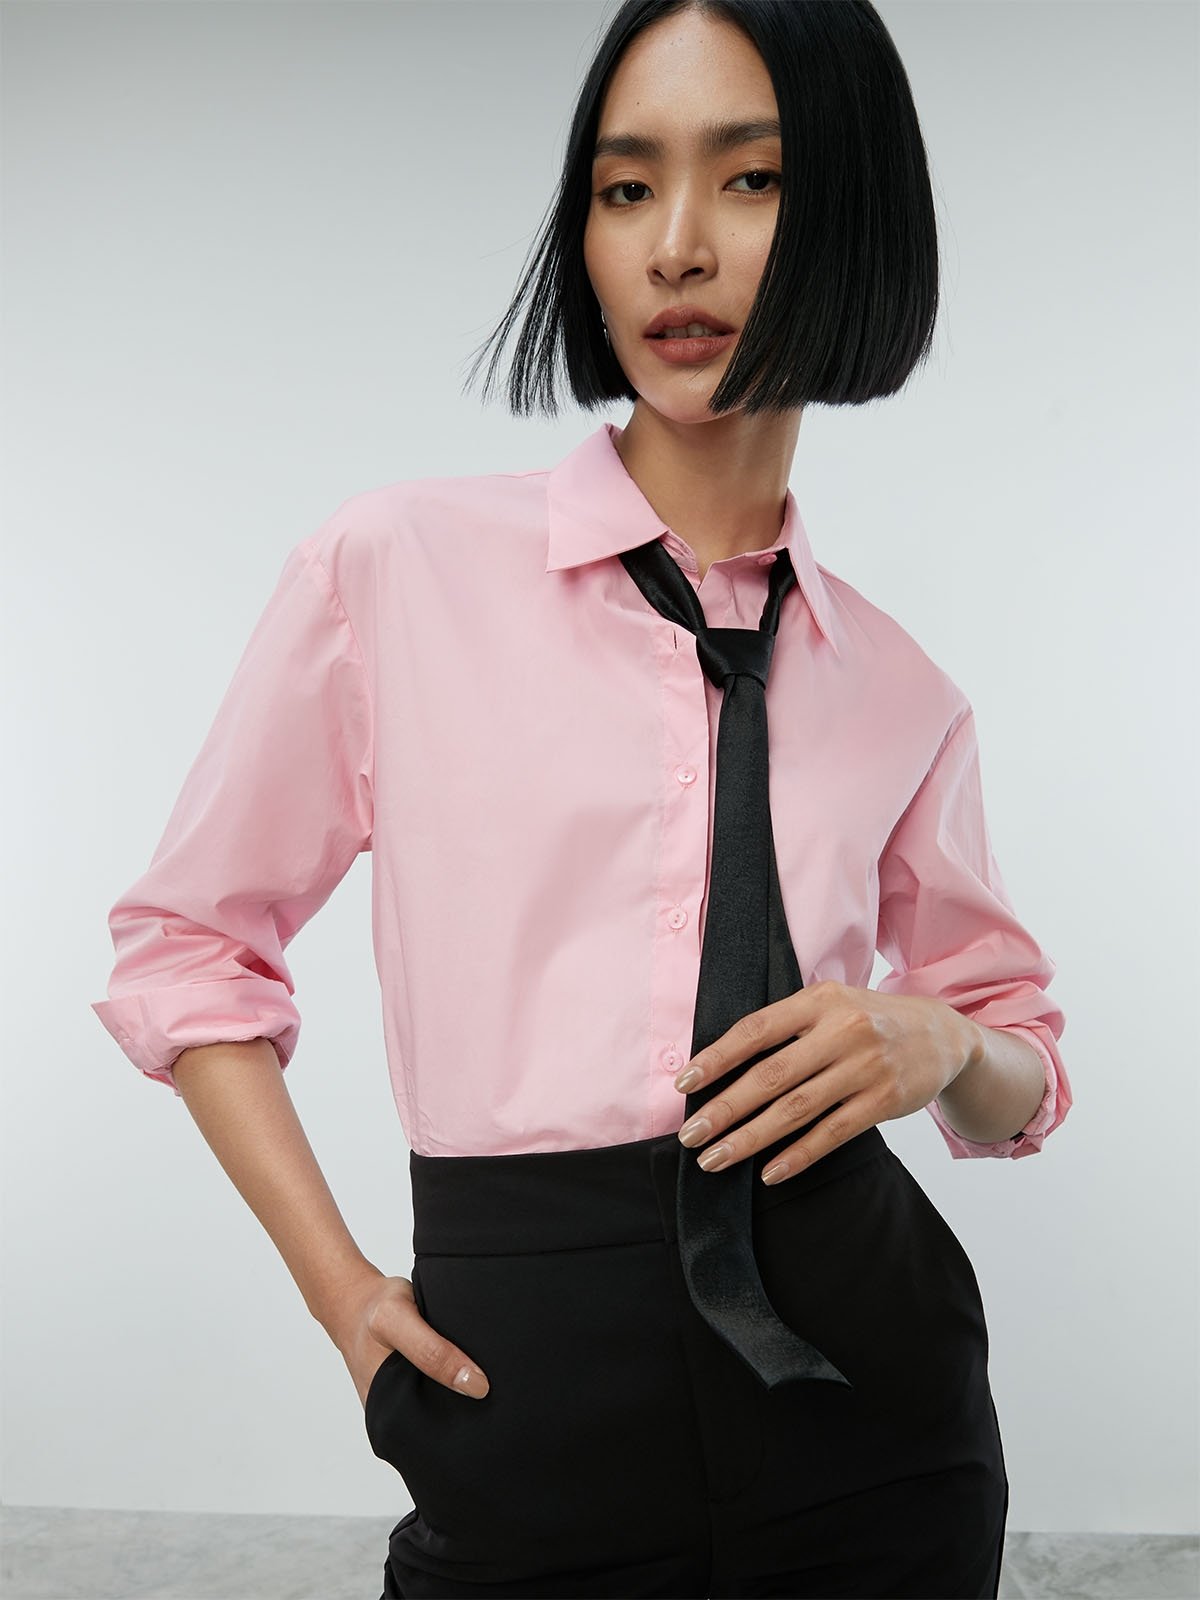 beautiful blonde woman in pink shirt and black pants generative AI 27806860  Stock Photo at Vecteezy